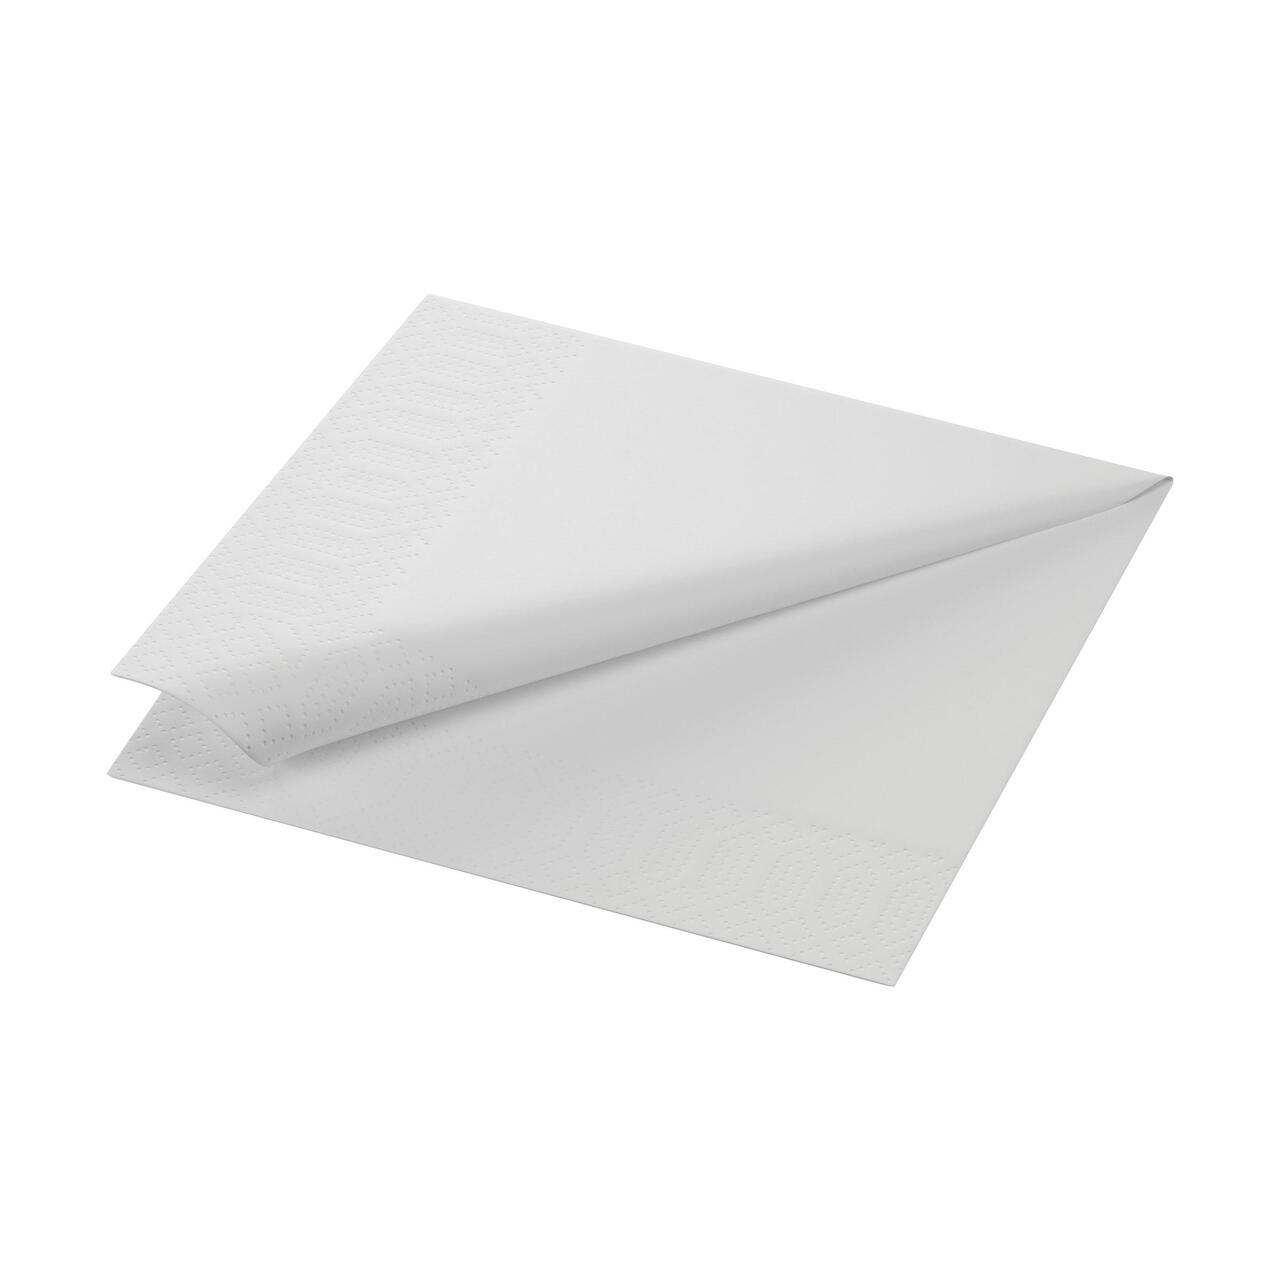 White Compostable Paper Napkins 50 per pack